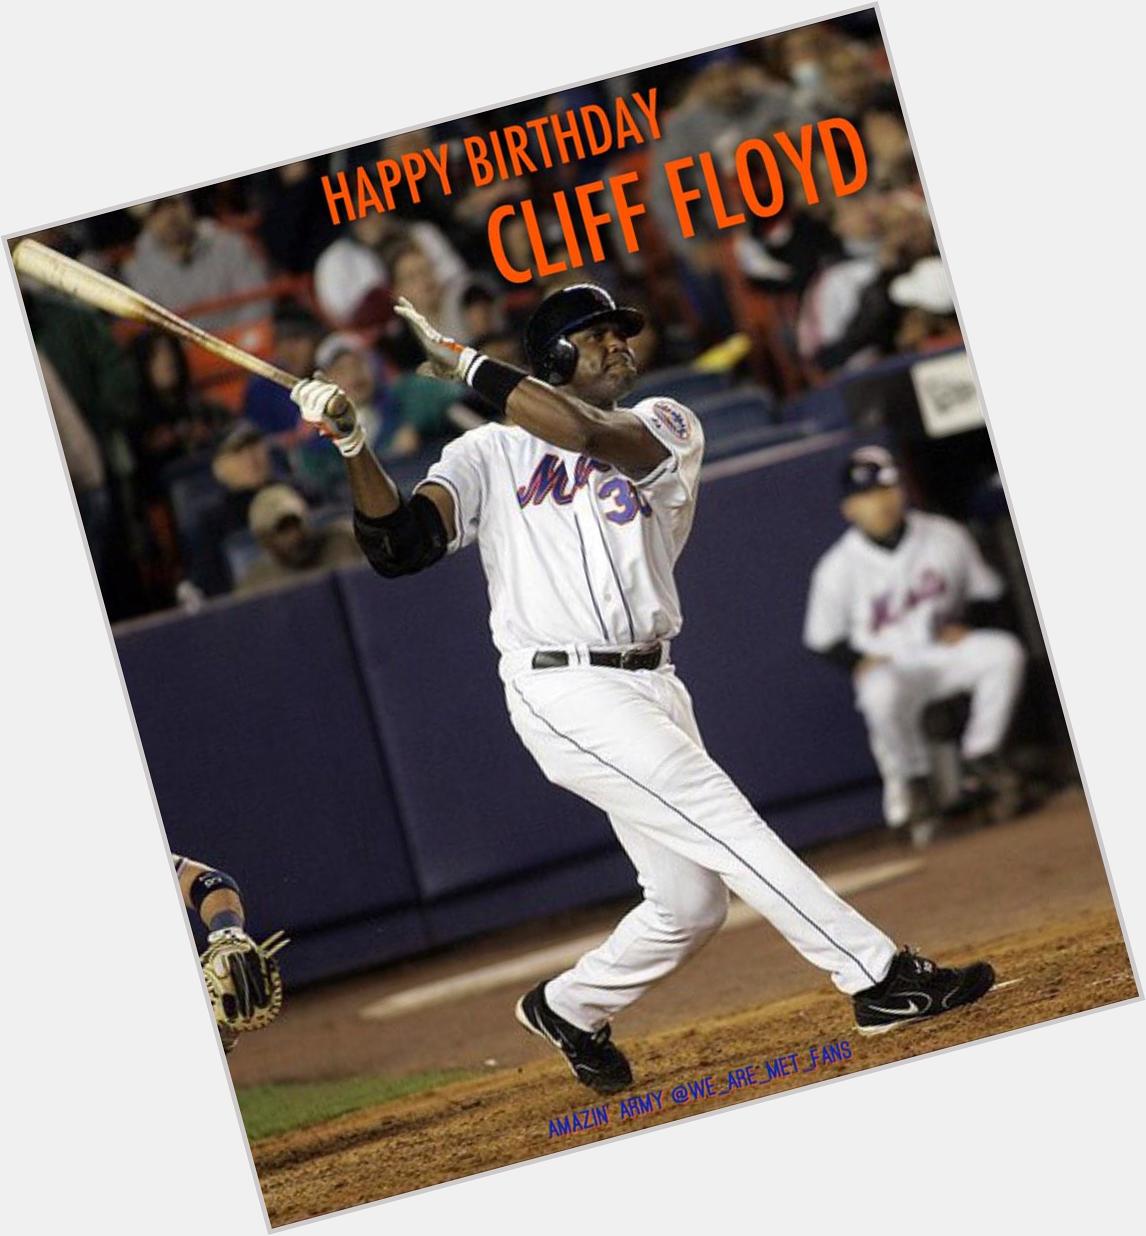 Happy Birthday to former Met Cliff Floyd! 